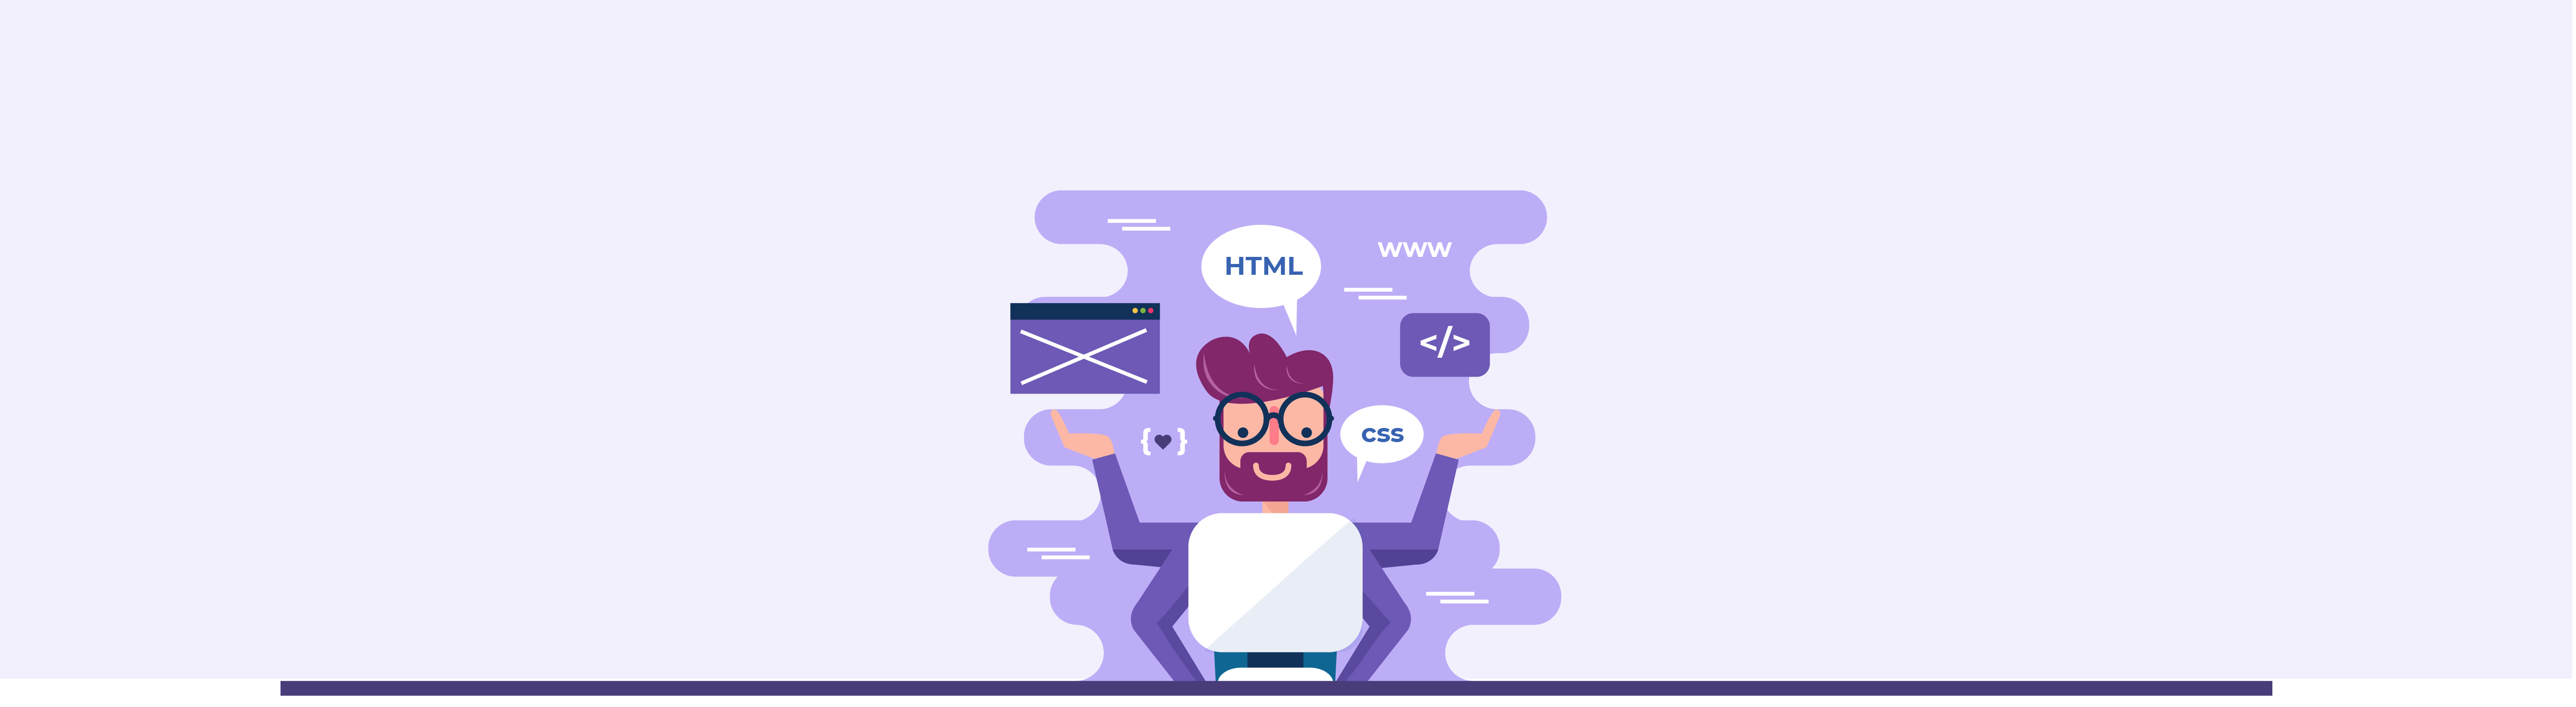 website designing and development banner image